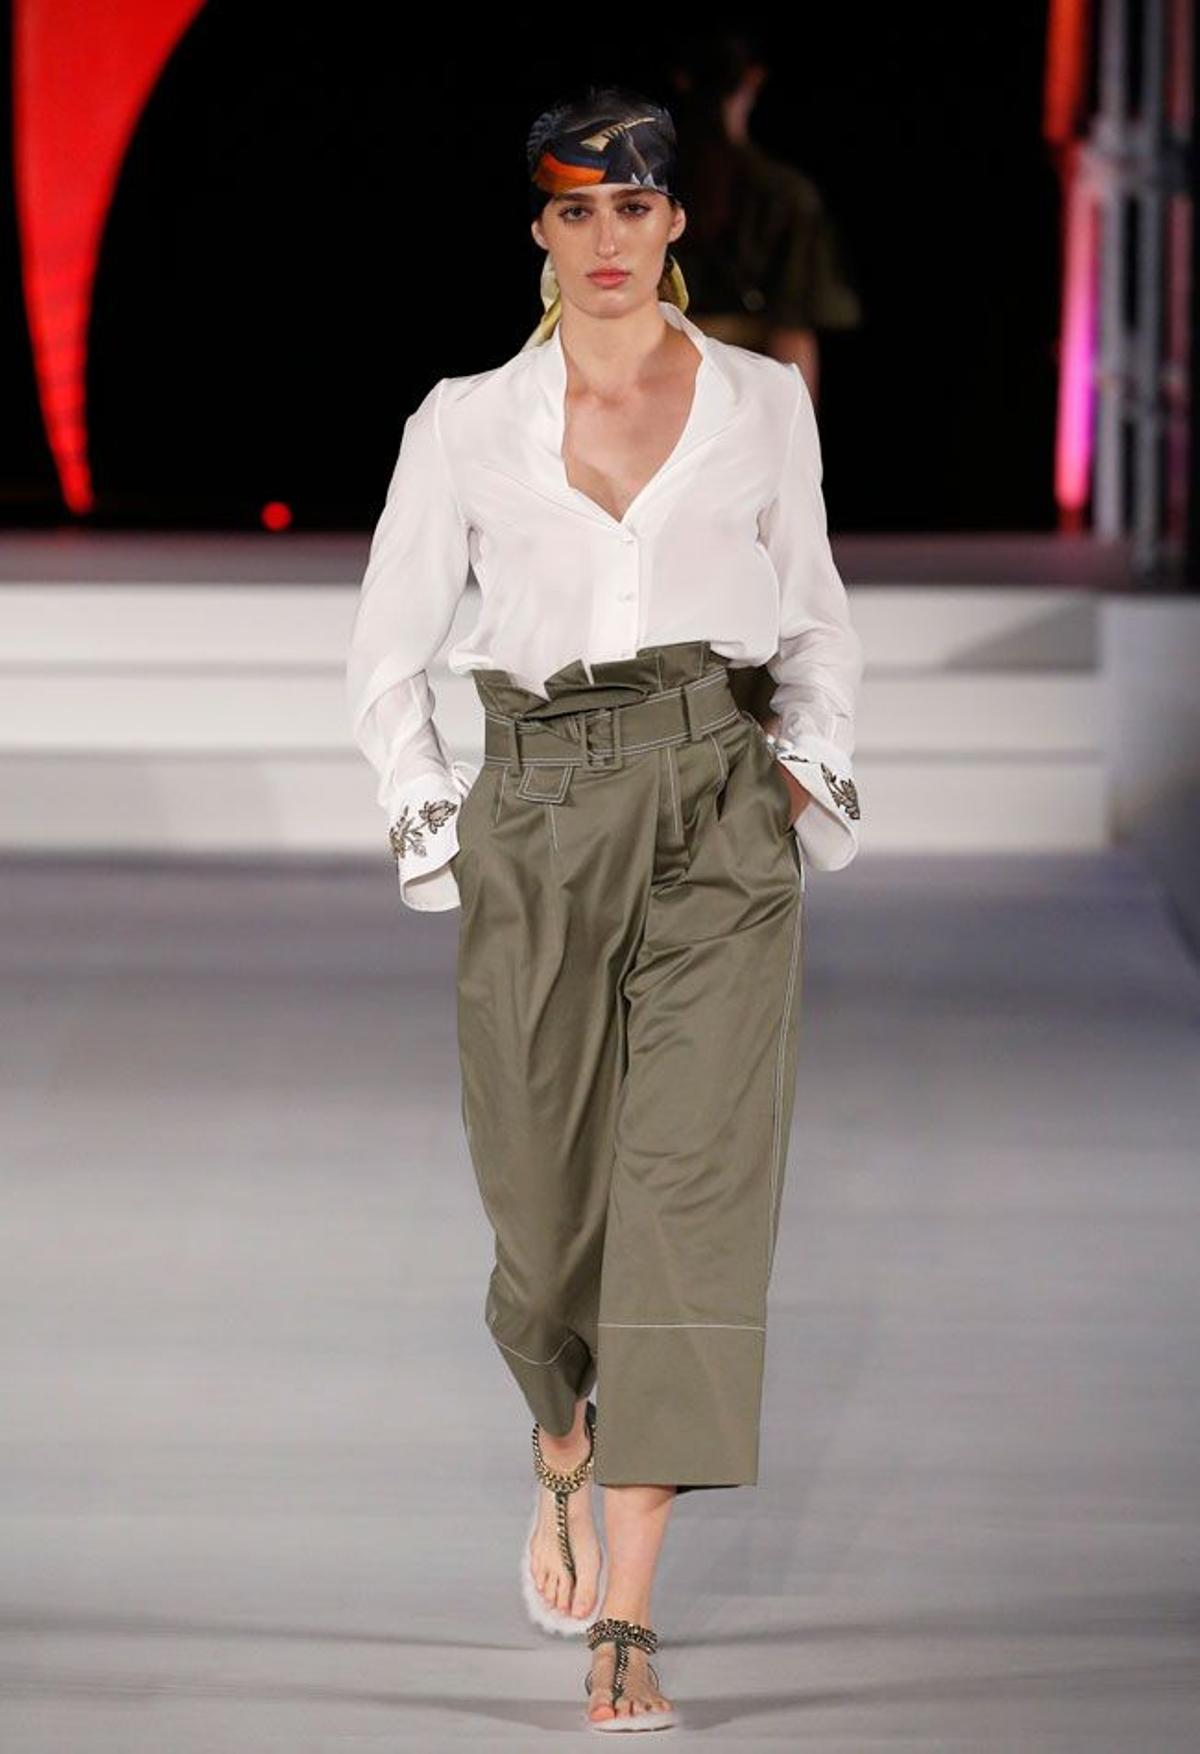 Mercedes Benz Fashion Weekend Ibiza: Jorge Vázquez, look safari